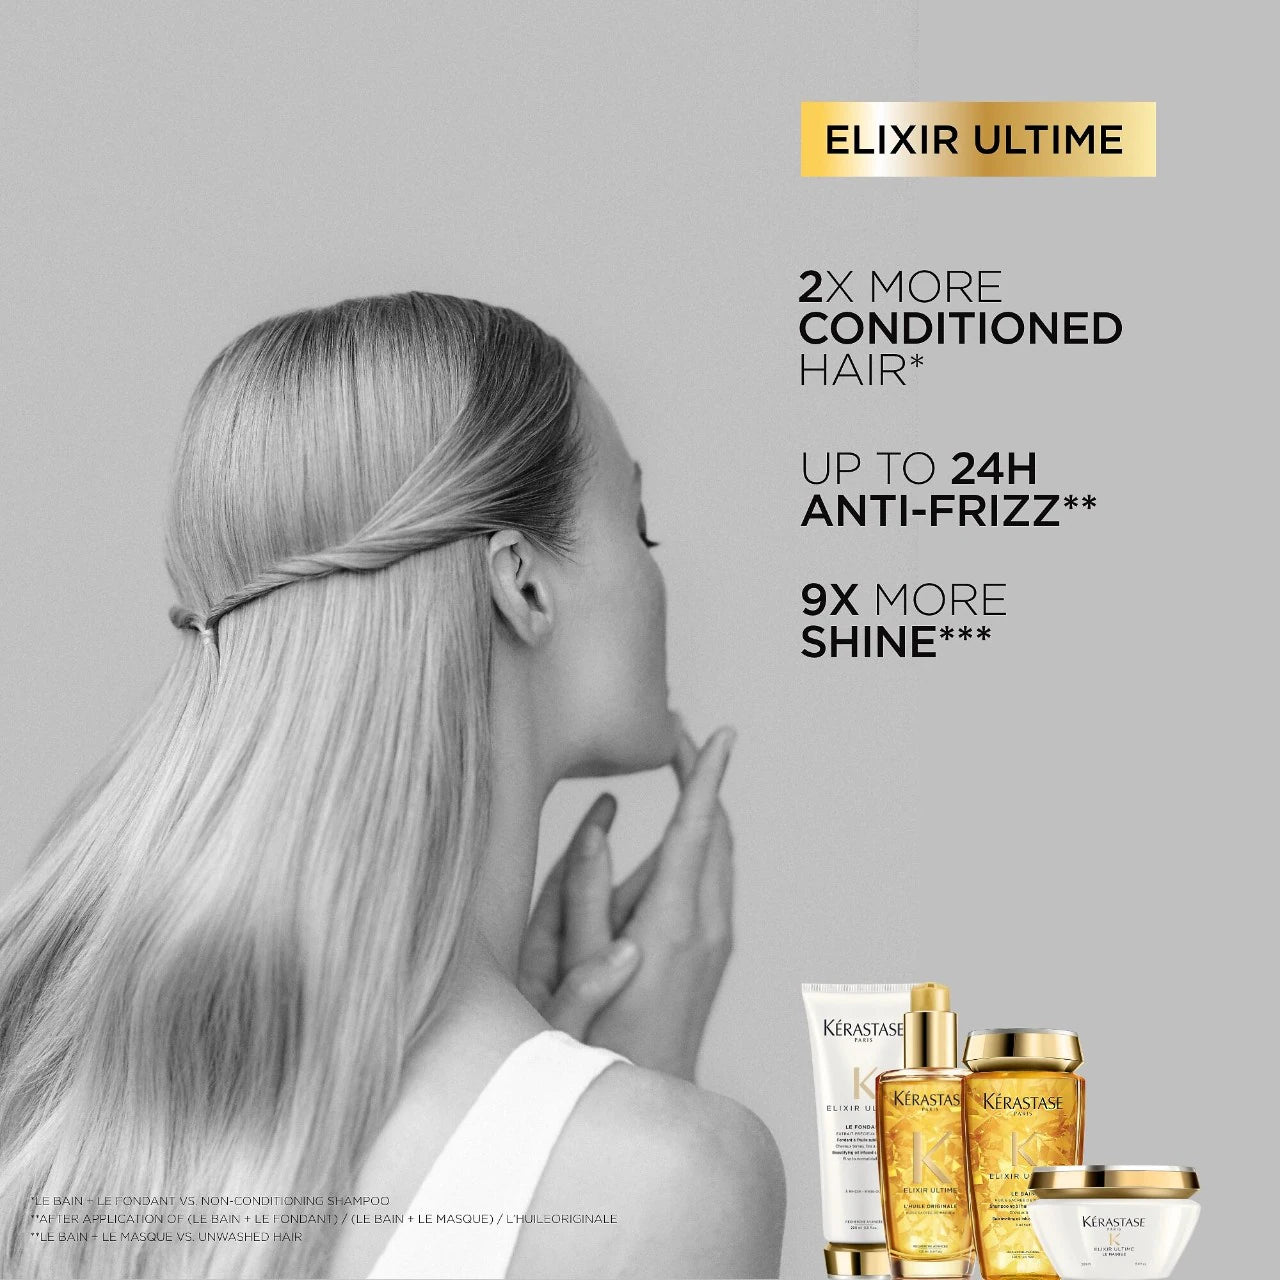 Kerastase Elixir Ultime L'Huile Original Hair Oil 1.7 oz